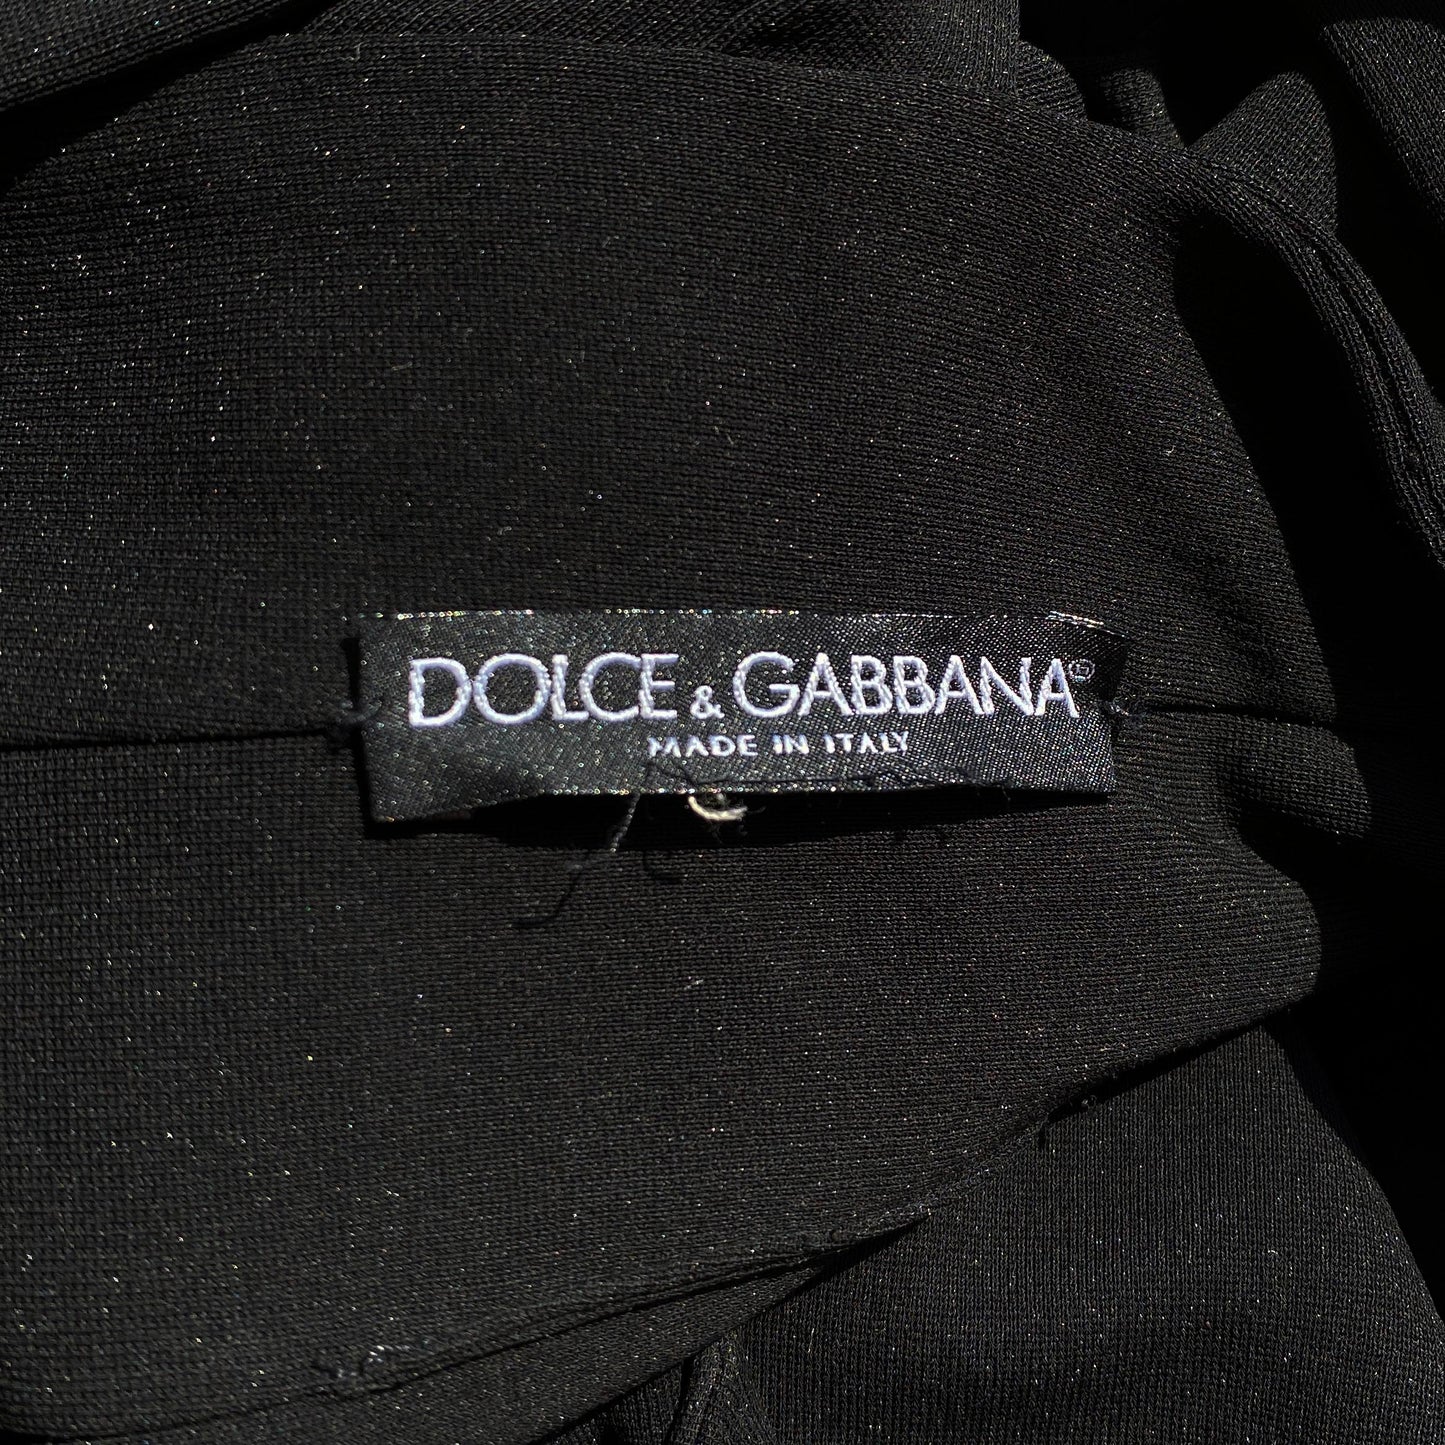 Dolce and Gabbana Backless Dress